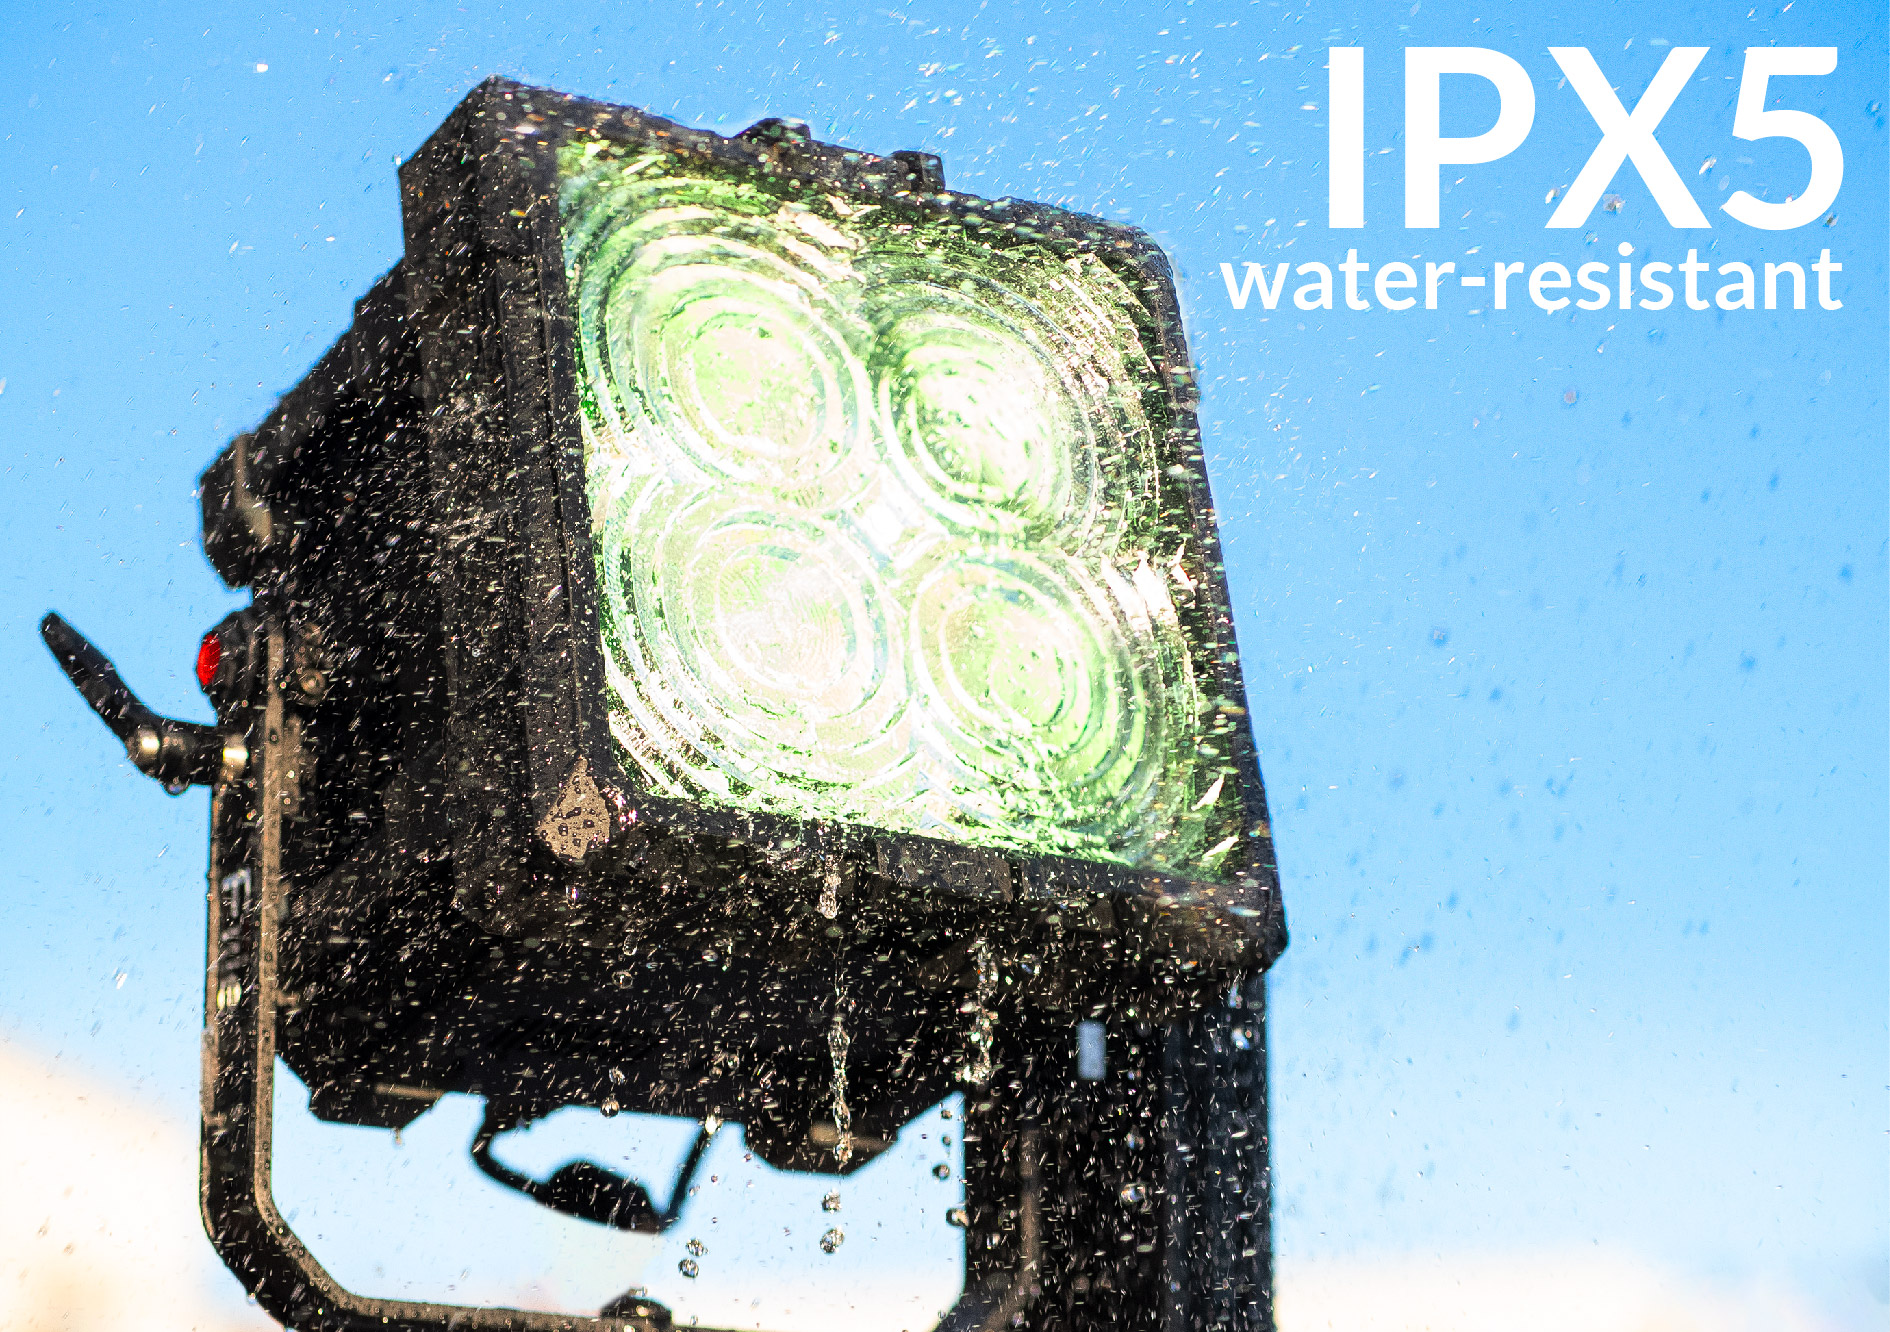 Fiilex Matrix COLOR - IPX5 water-resistant